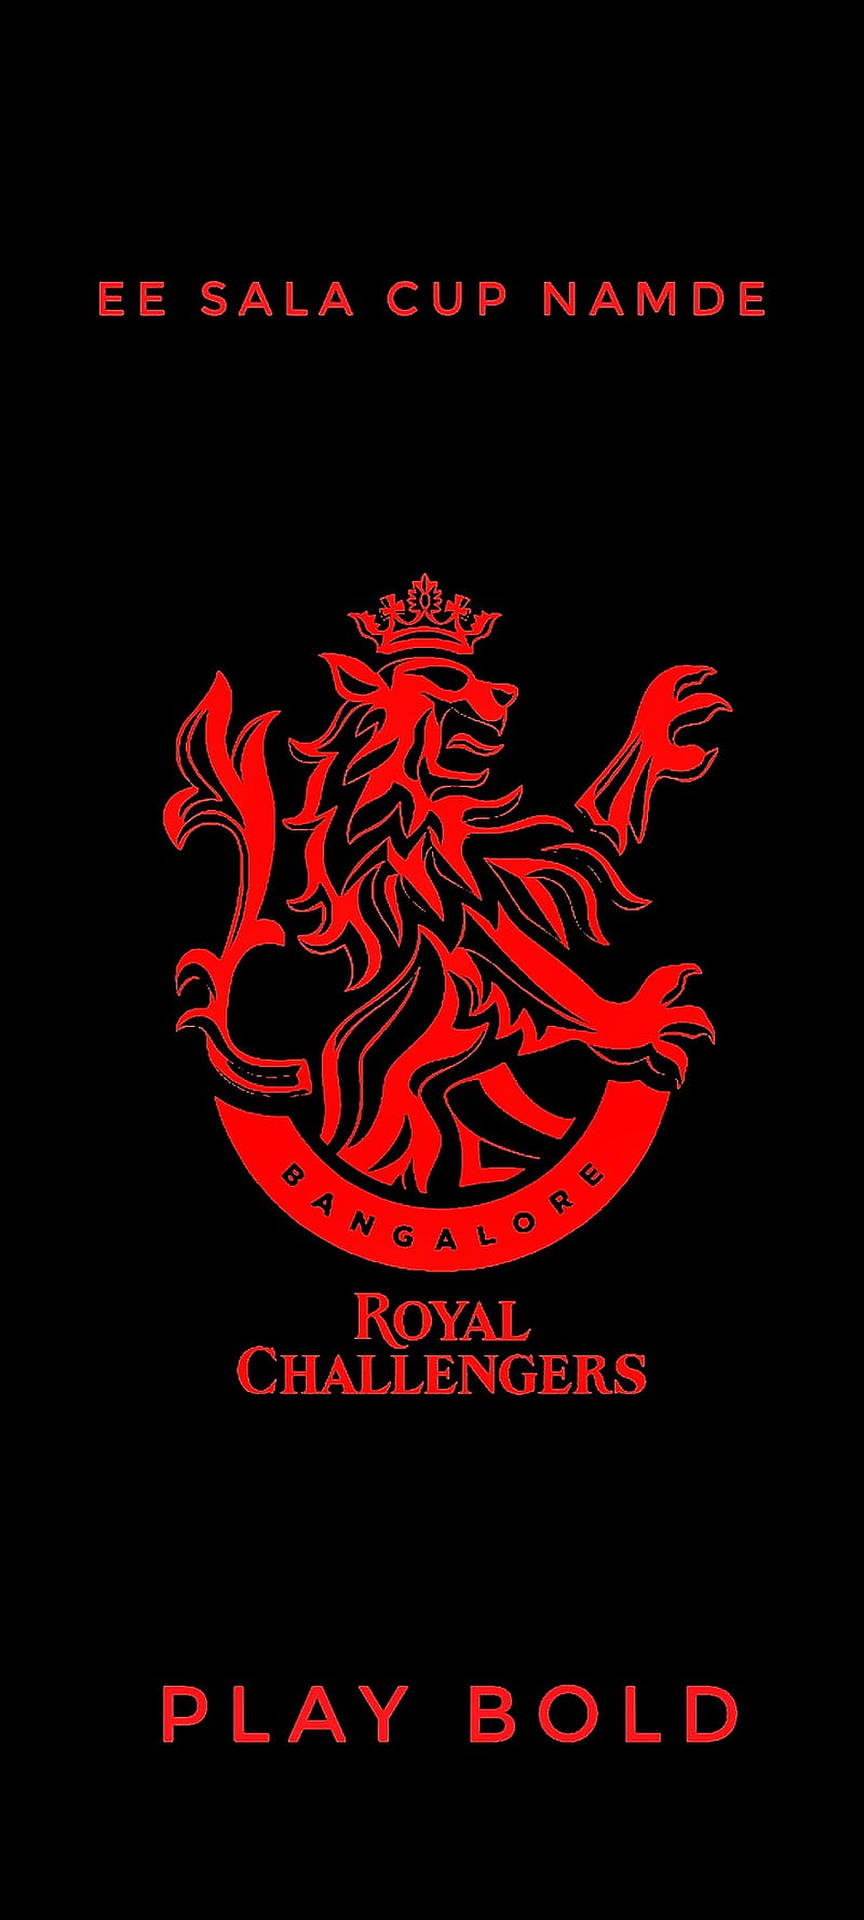 Royal Challengers Bangalore Ee Sala Cup Namde Wallpaper